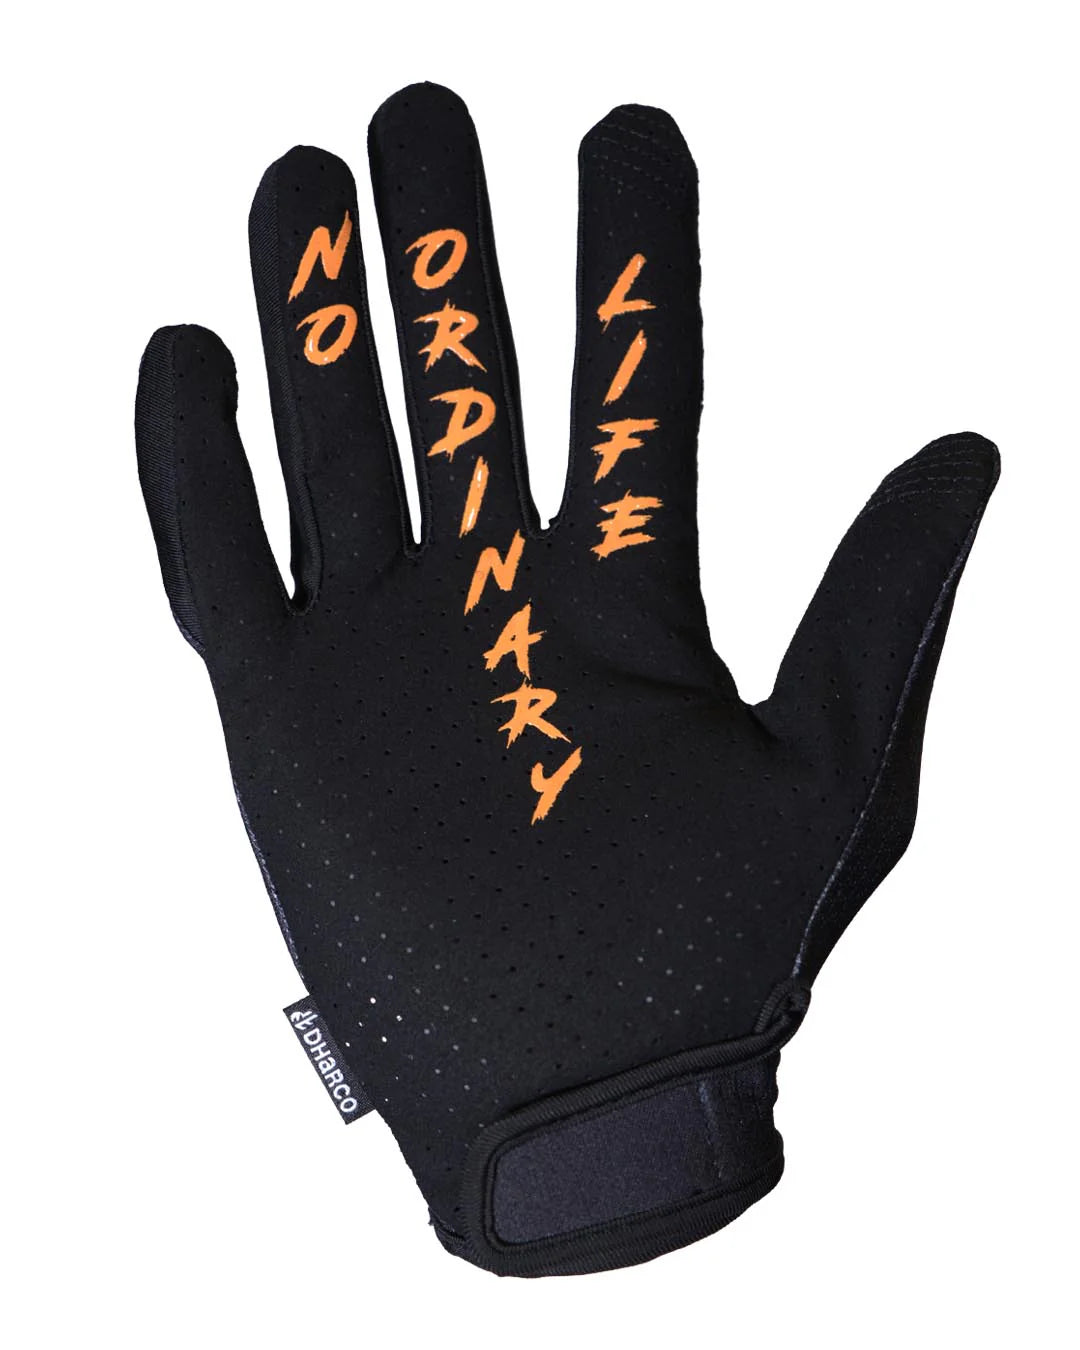 DHaRCO Mens Race Glove